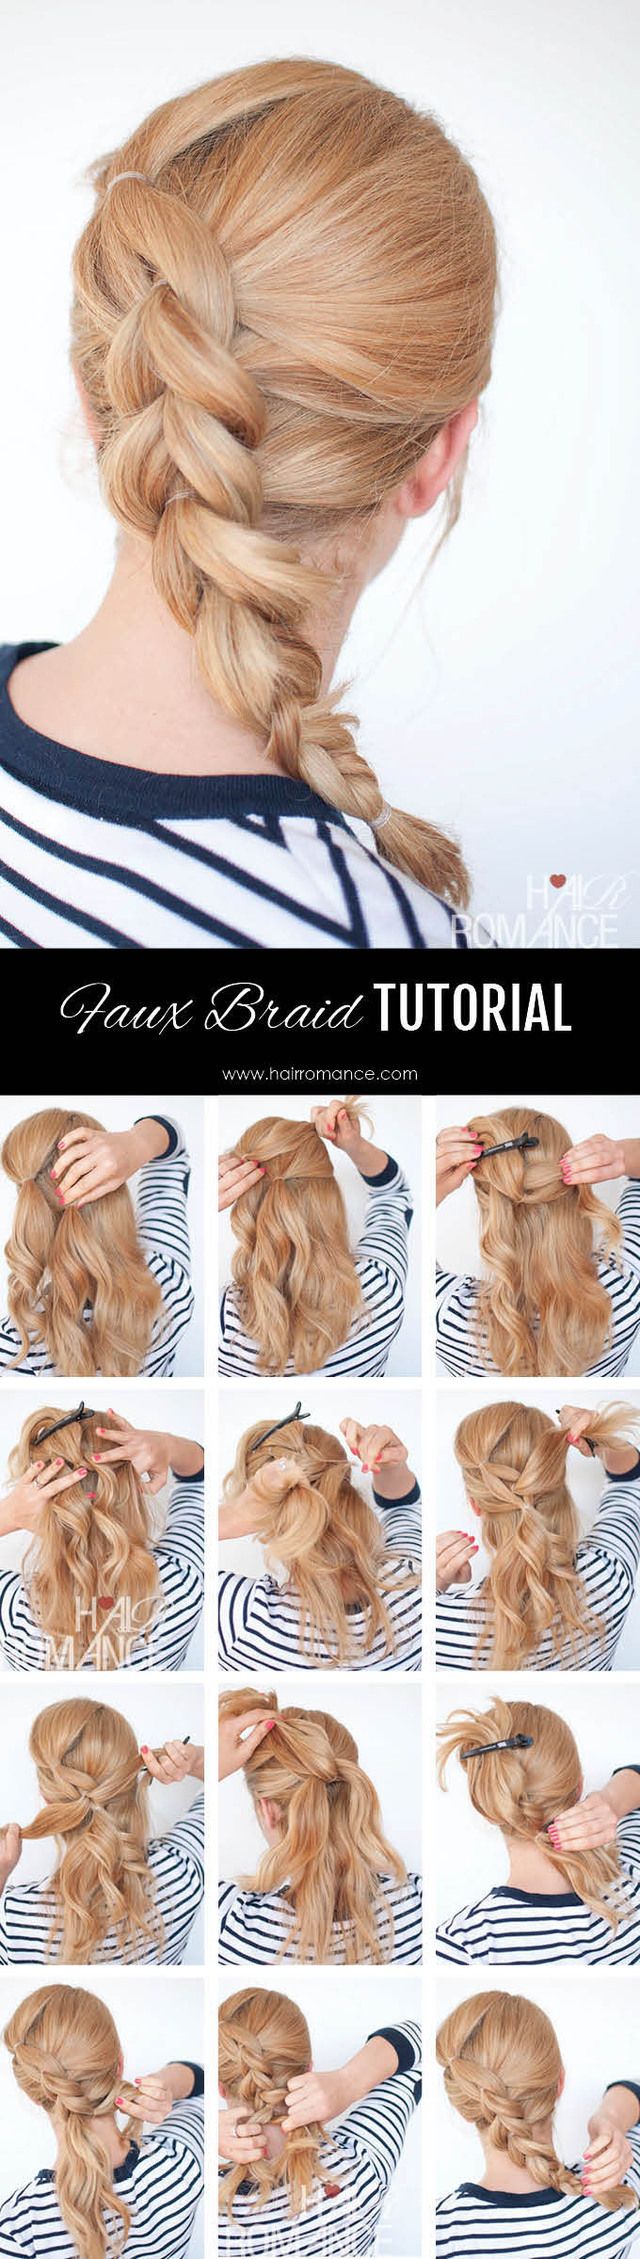 https://image.sistacafe.com/images/uploads/content_image/image/215363/1474537709-Hair-Romance-Braid-tutorial-cheat-the-faux-braid-Pull-through-braid-tutorial-5.jpg